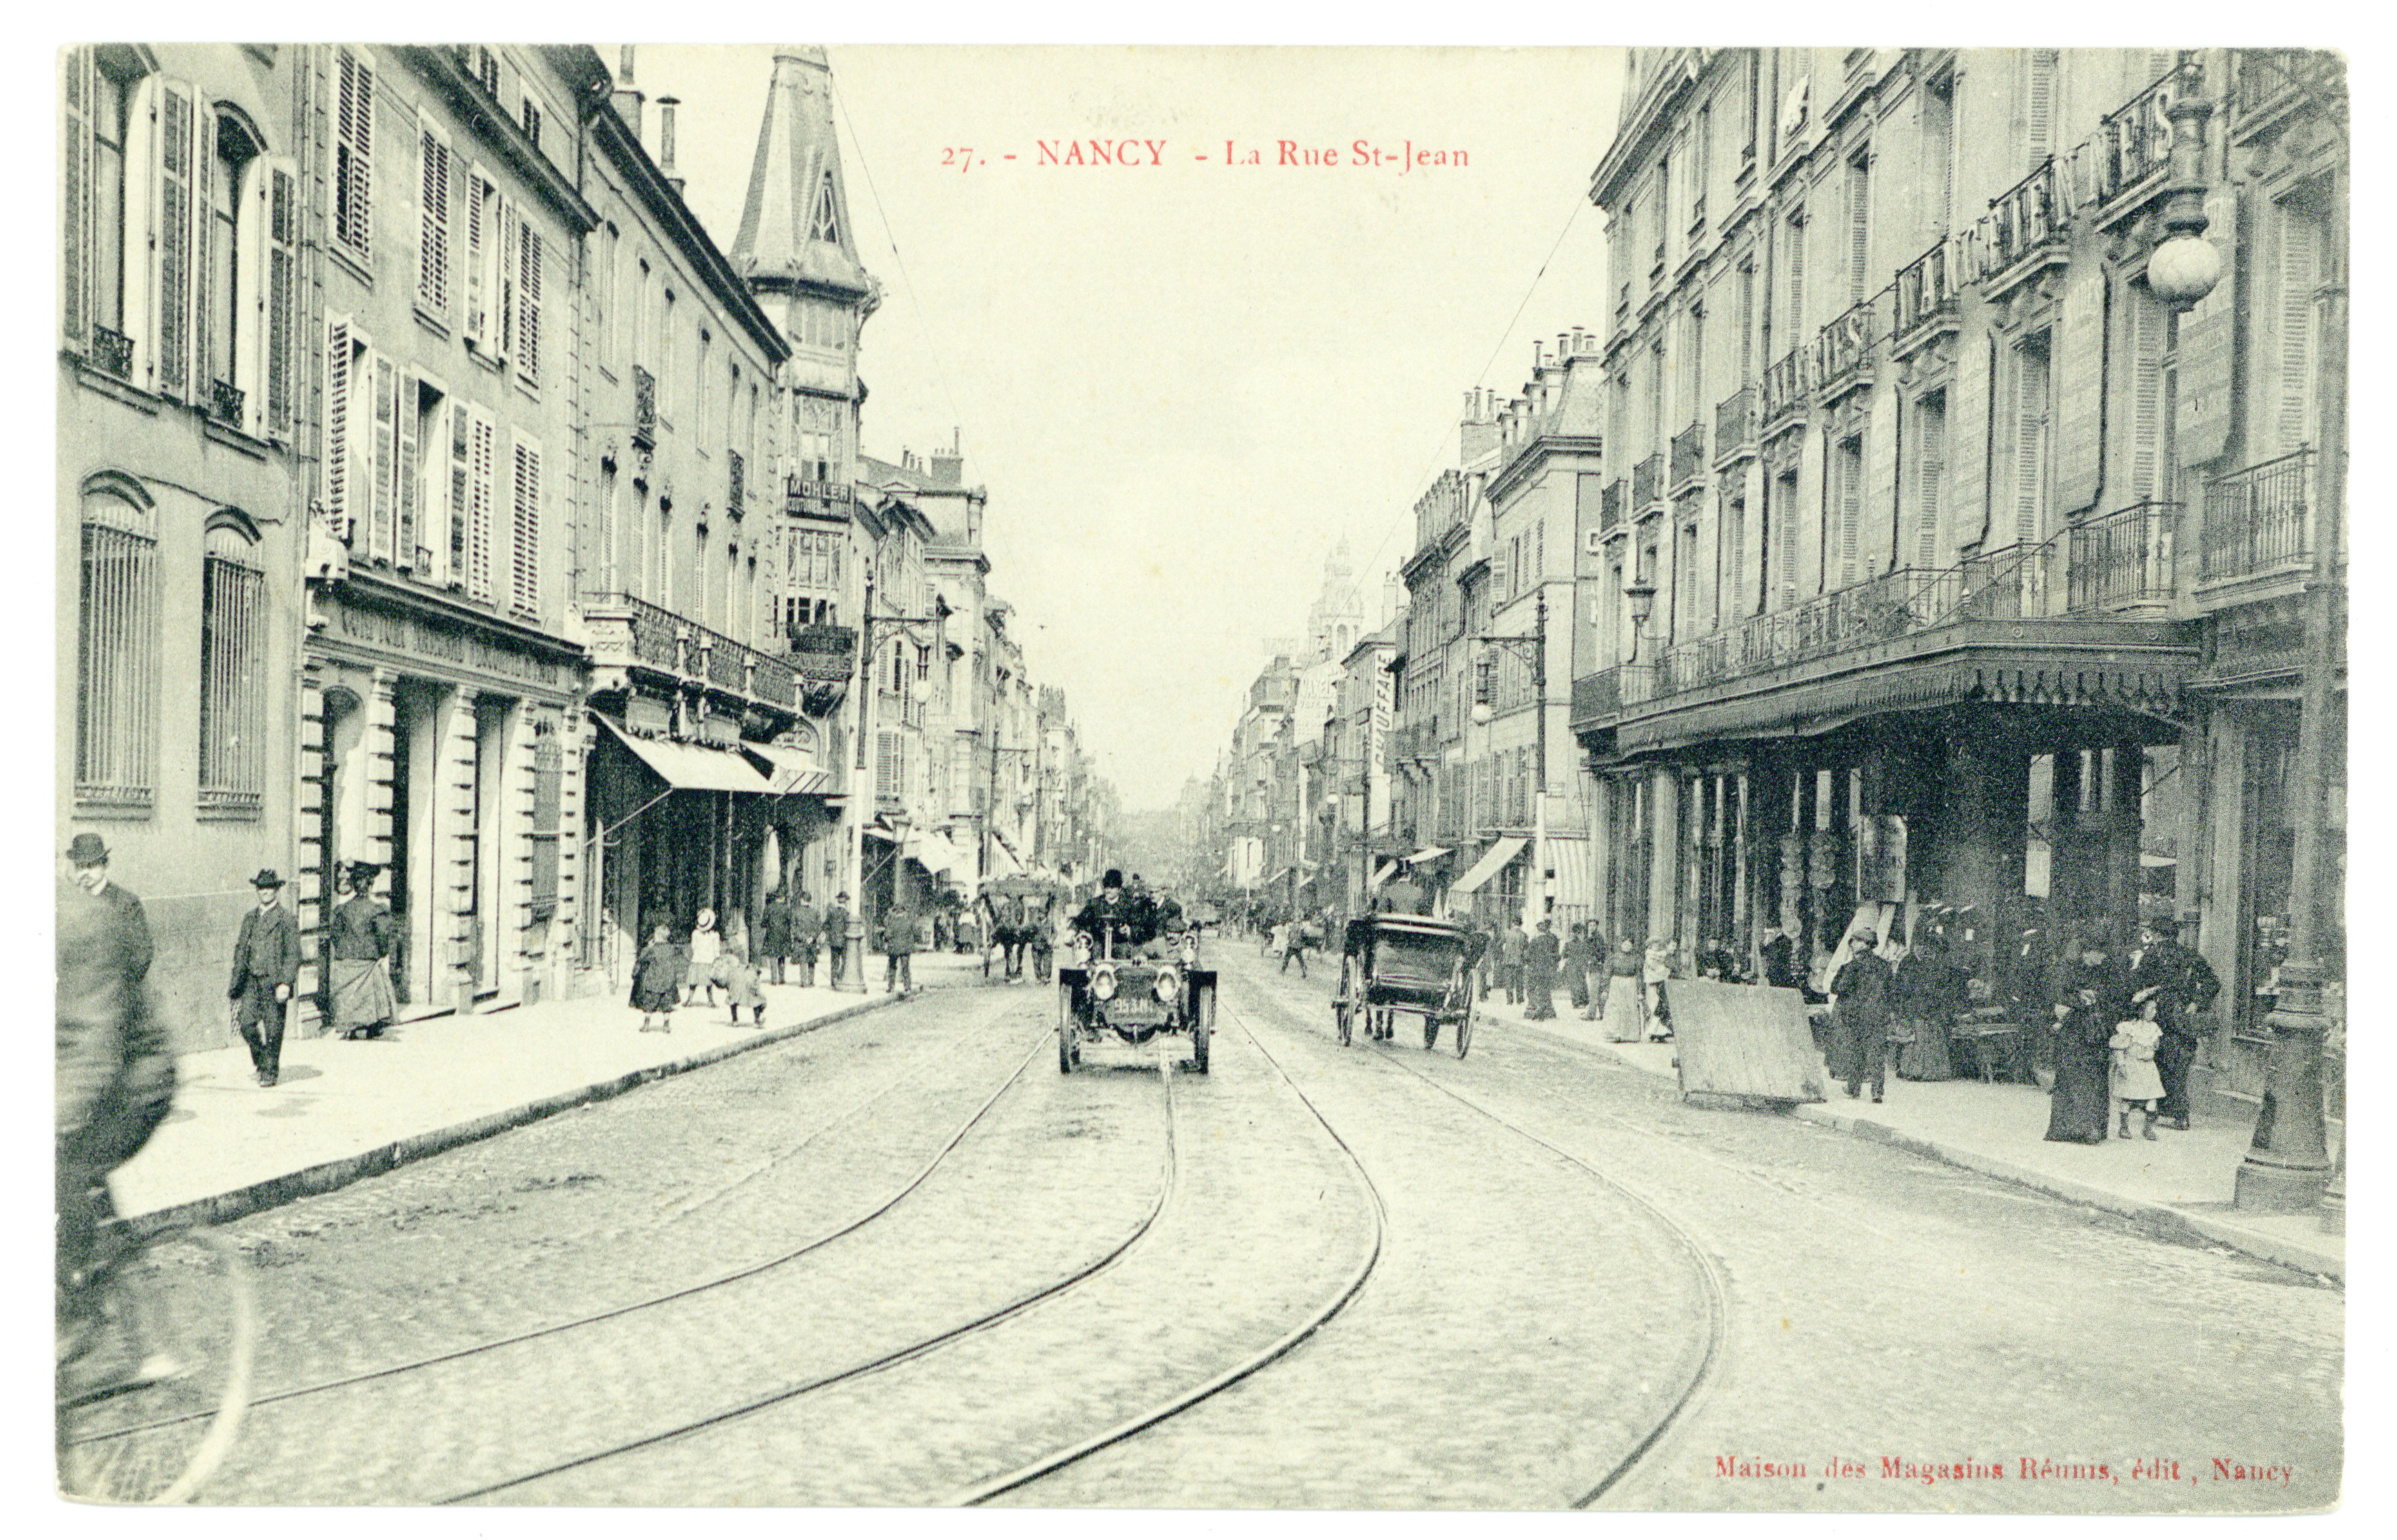 Contenu du Nancy : la rue St-Jean